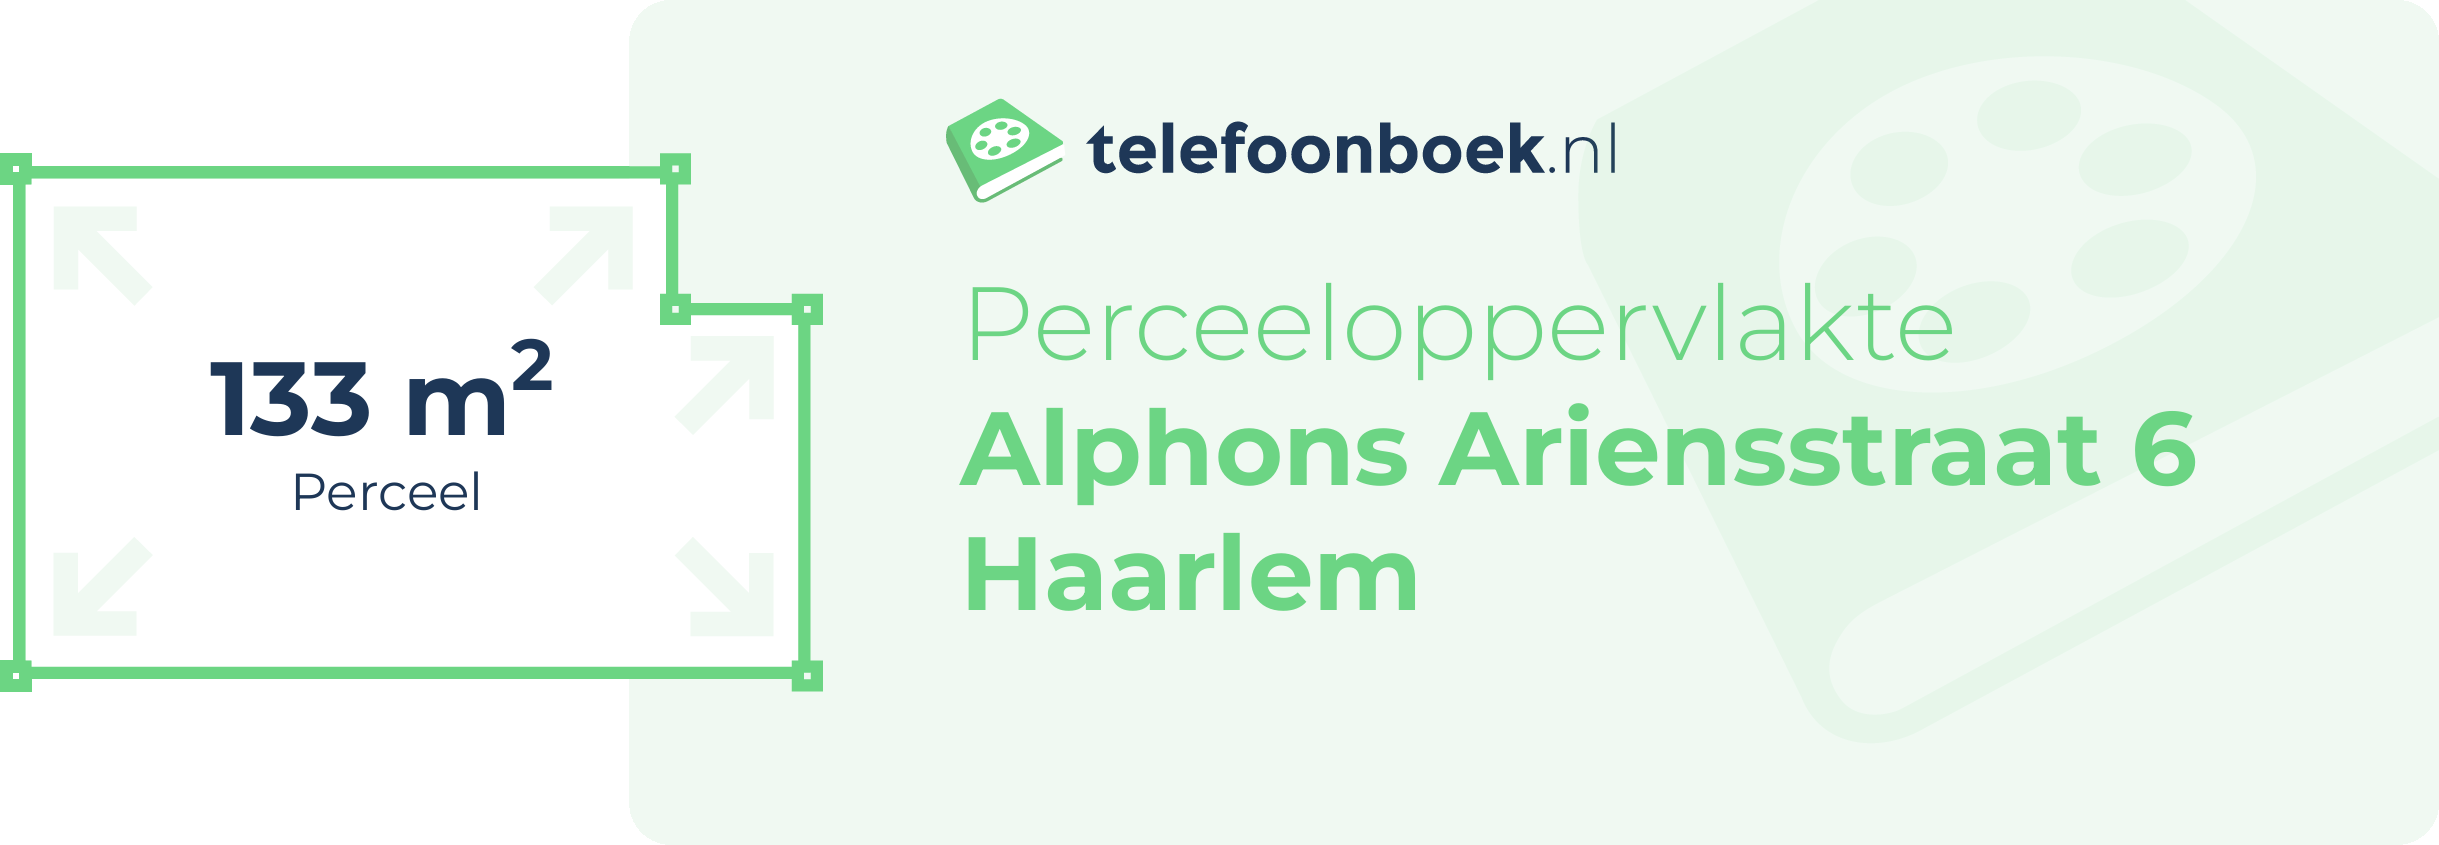 Perceeloppervlakte Alphons Ariensstraat 6 Haarlem